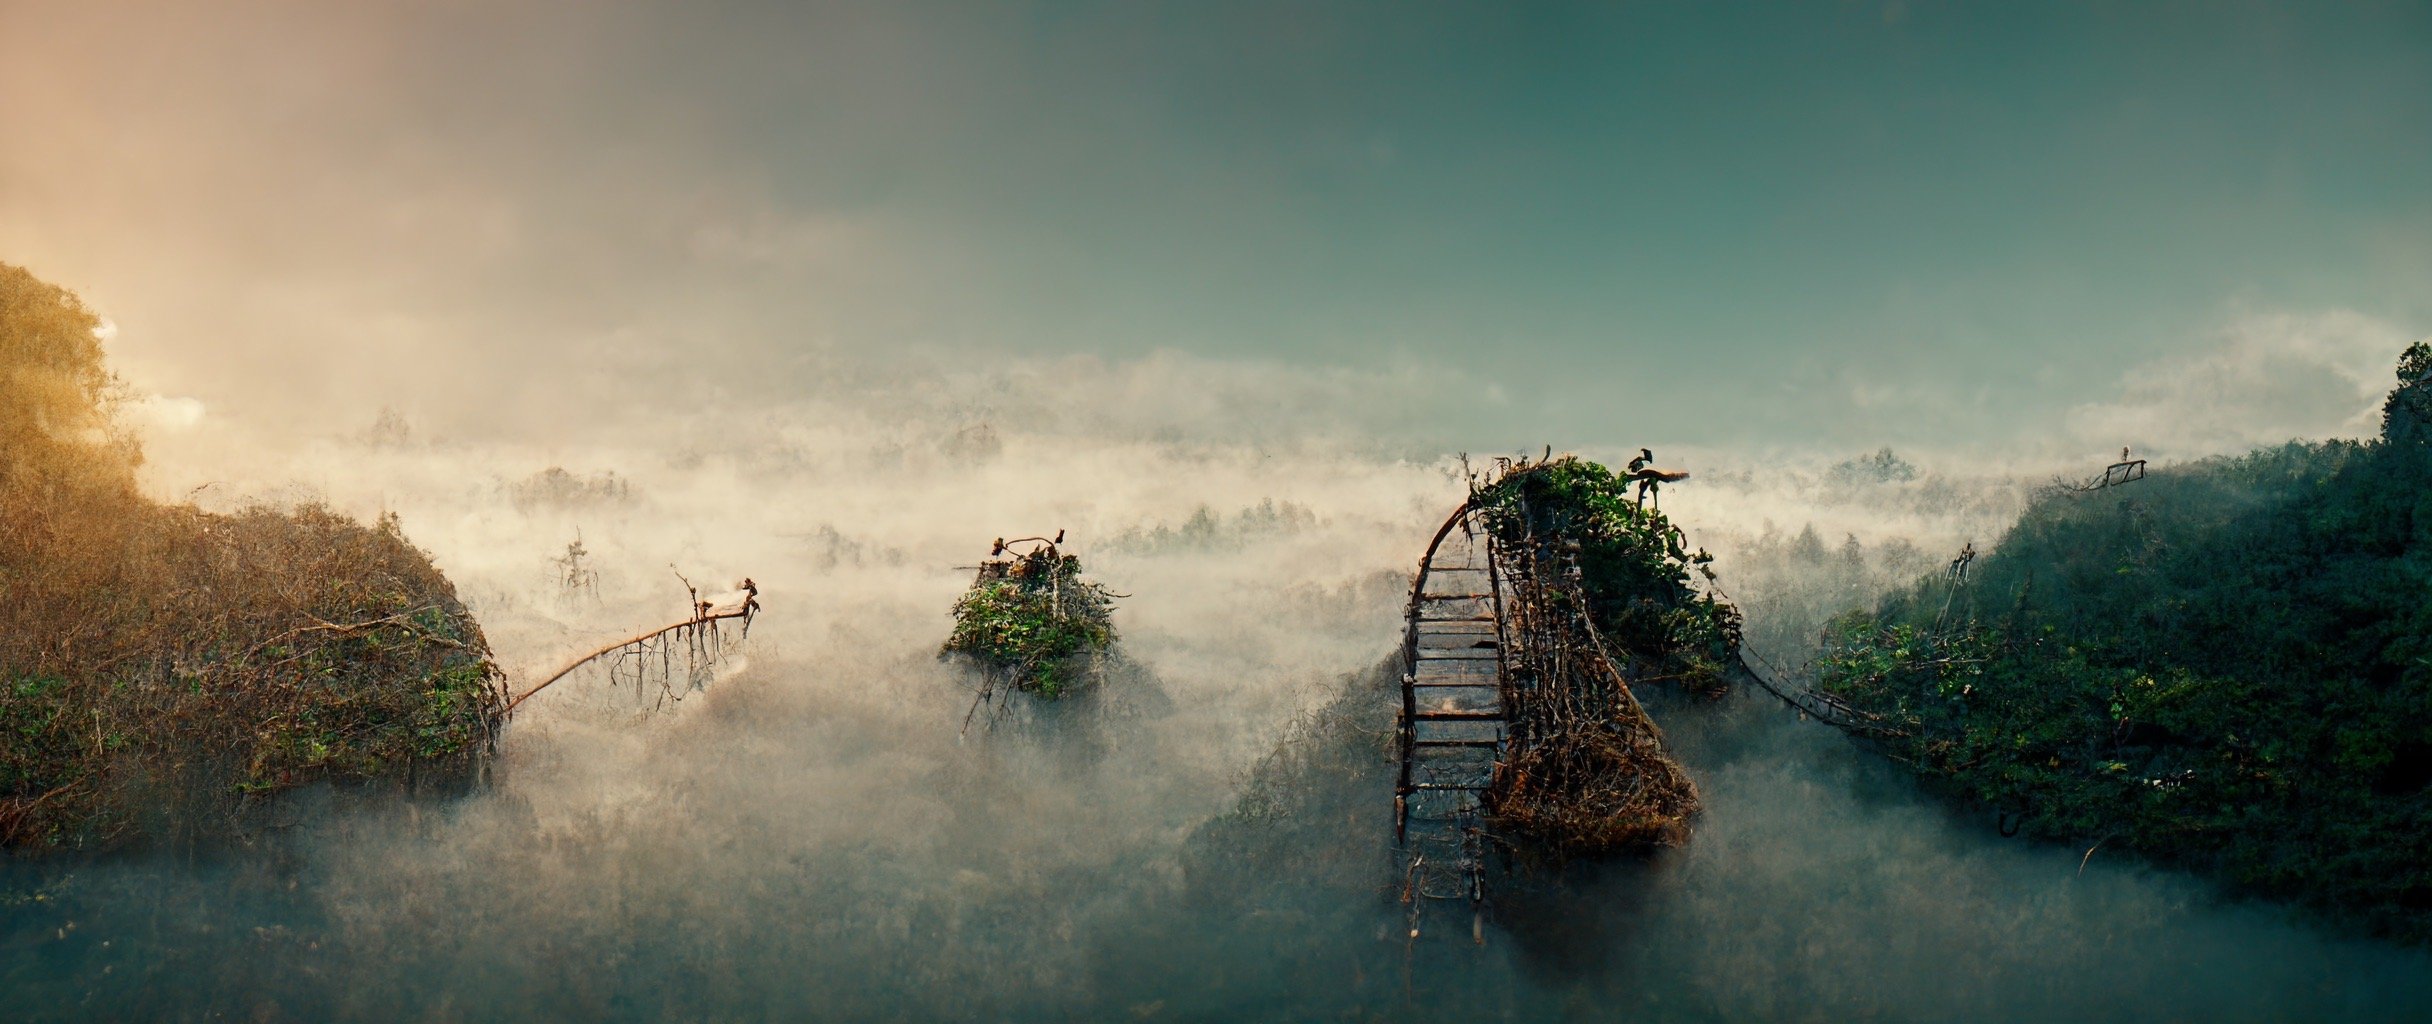 fc354f1b-b23a-4a01-bff1-0e08d6450f1b_S3RAPH_Old_wood_board_and_rope_bridge_into_fog._cobwebs._crossing_Chasm_in_a_lush_jungle_scene._cinematic_c.JPG